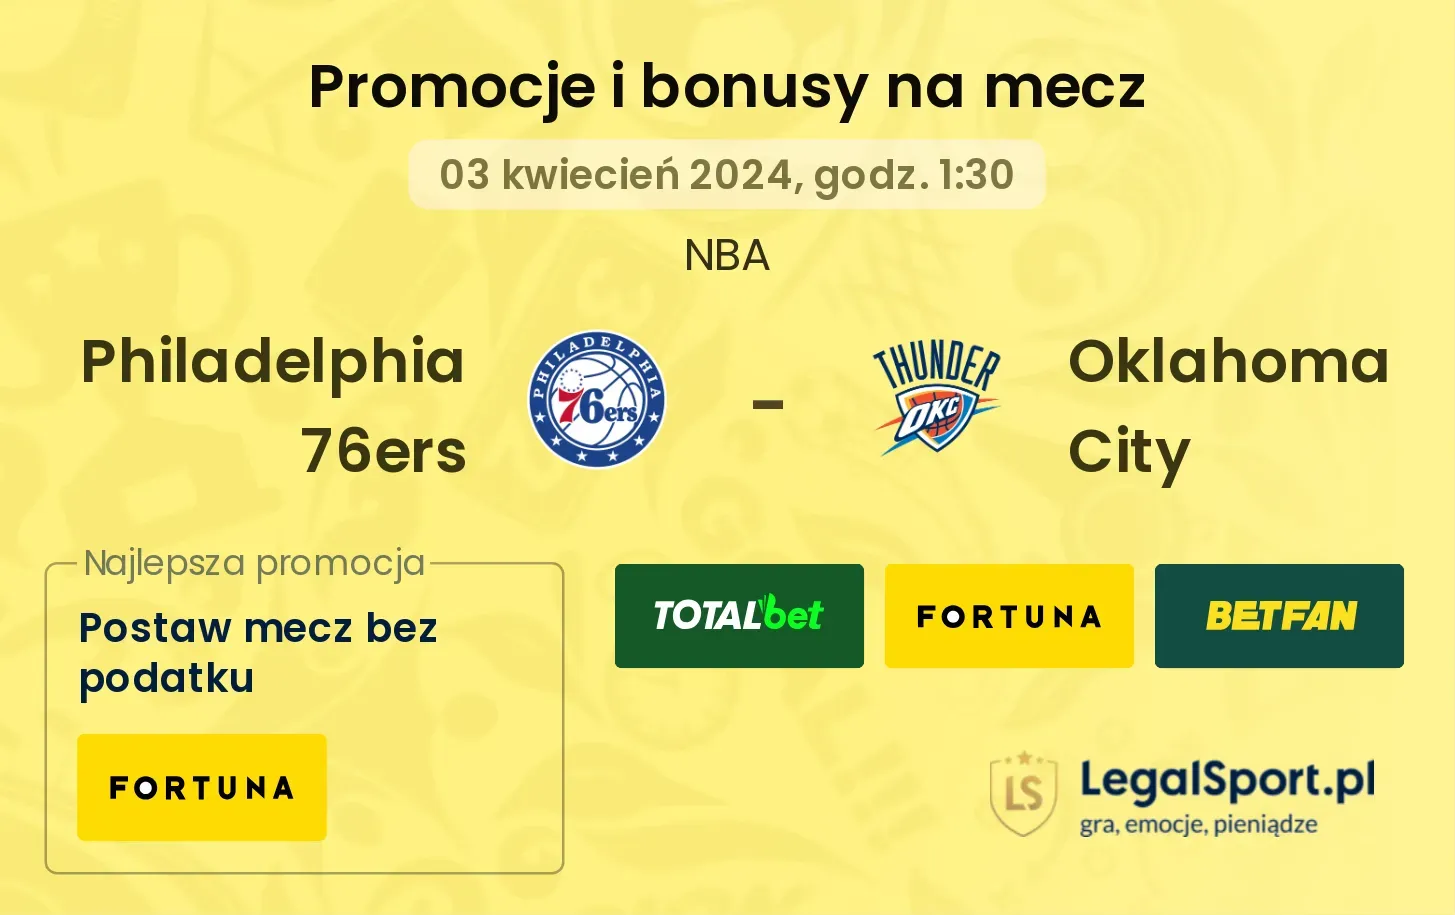 Philadelphia 76ers - Oklahoma City promocje bonusy na mecz